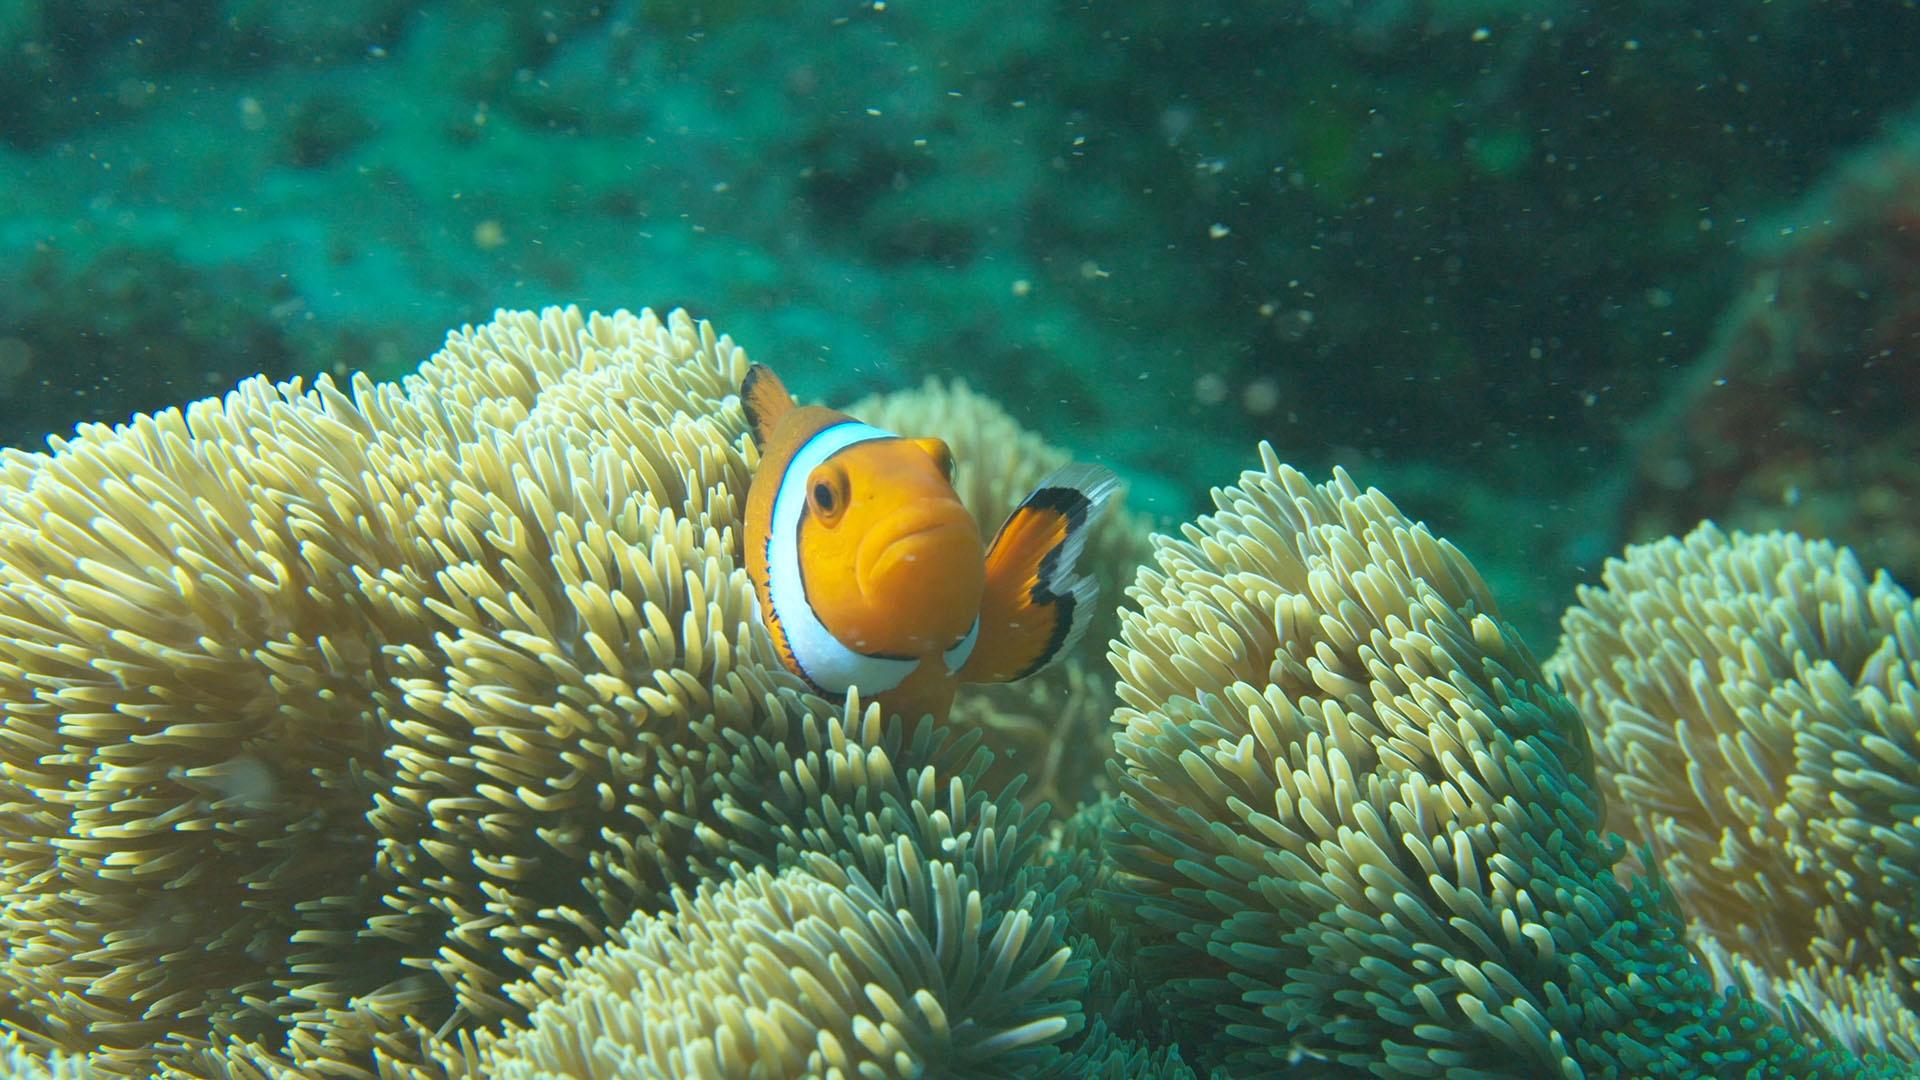 Clownfish in sea anemone at Okinawa, Japan.